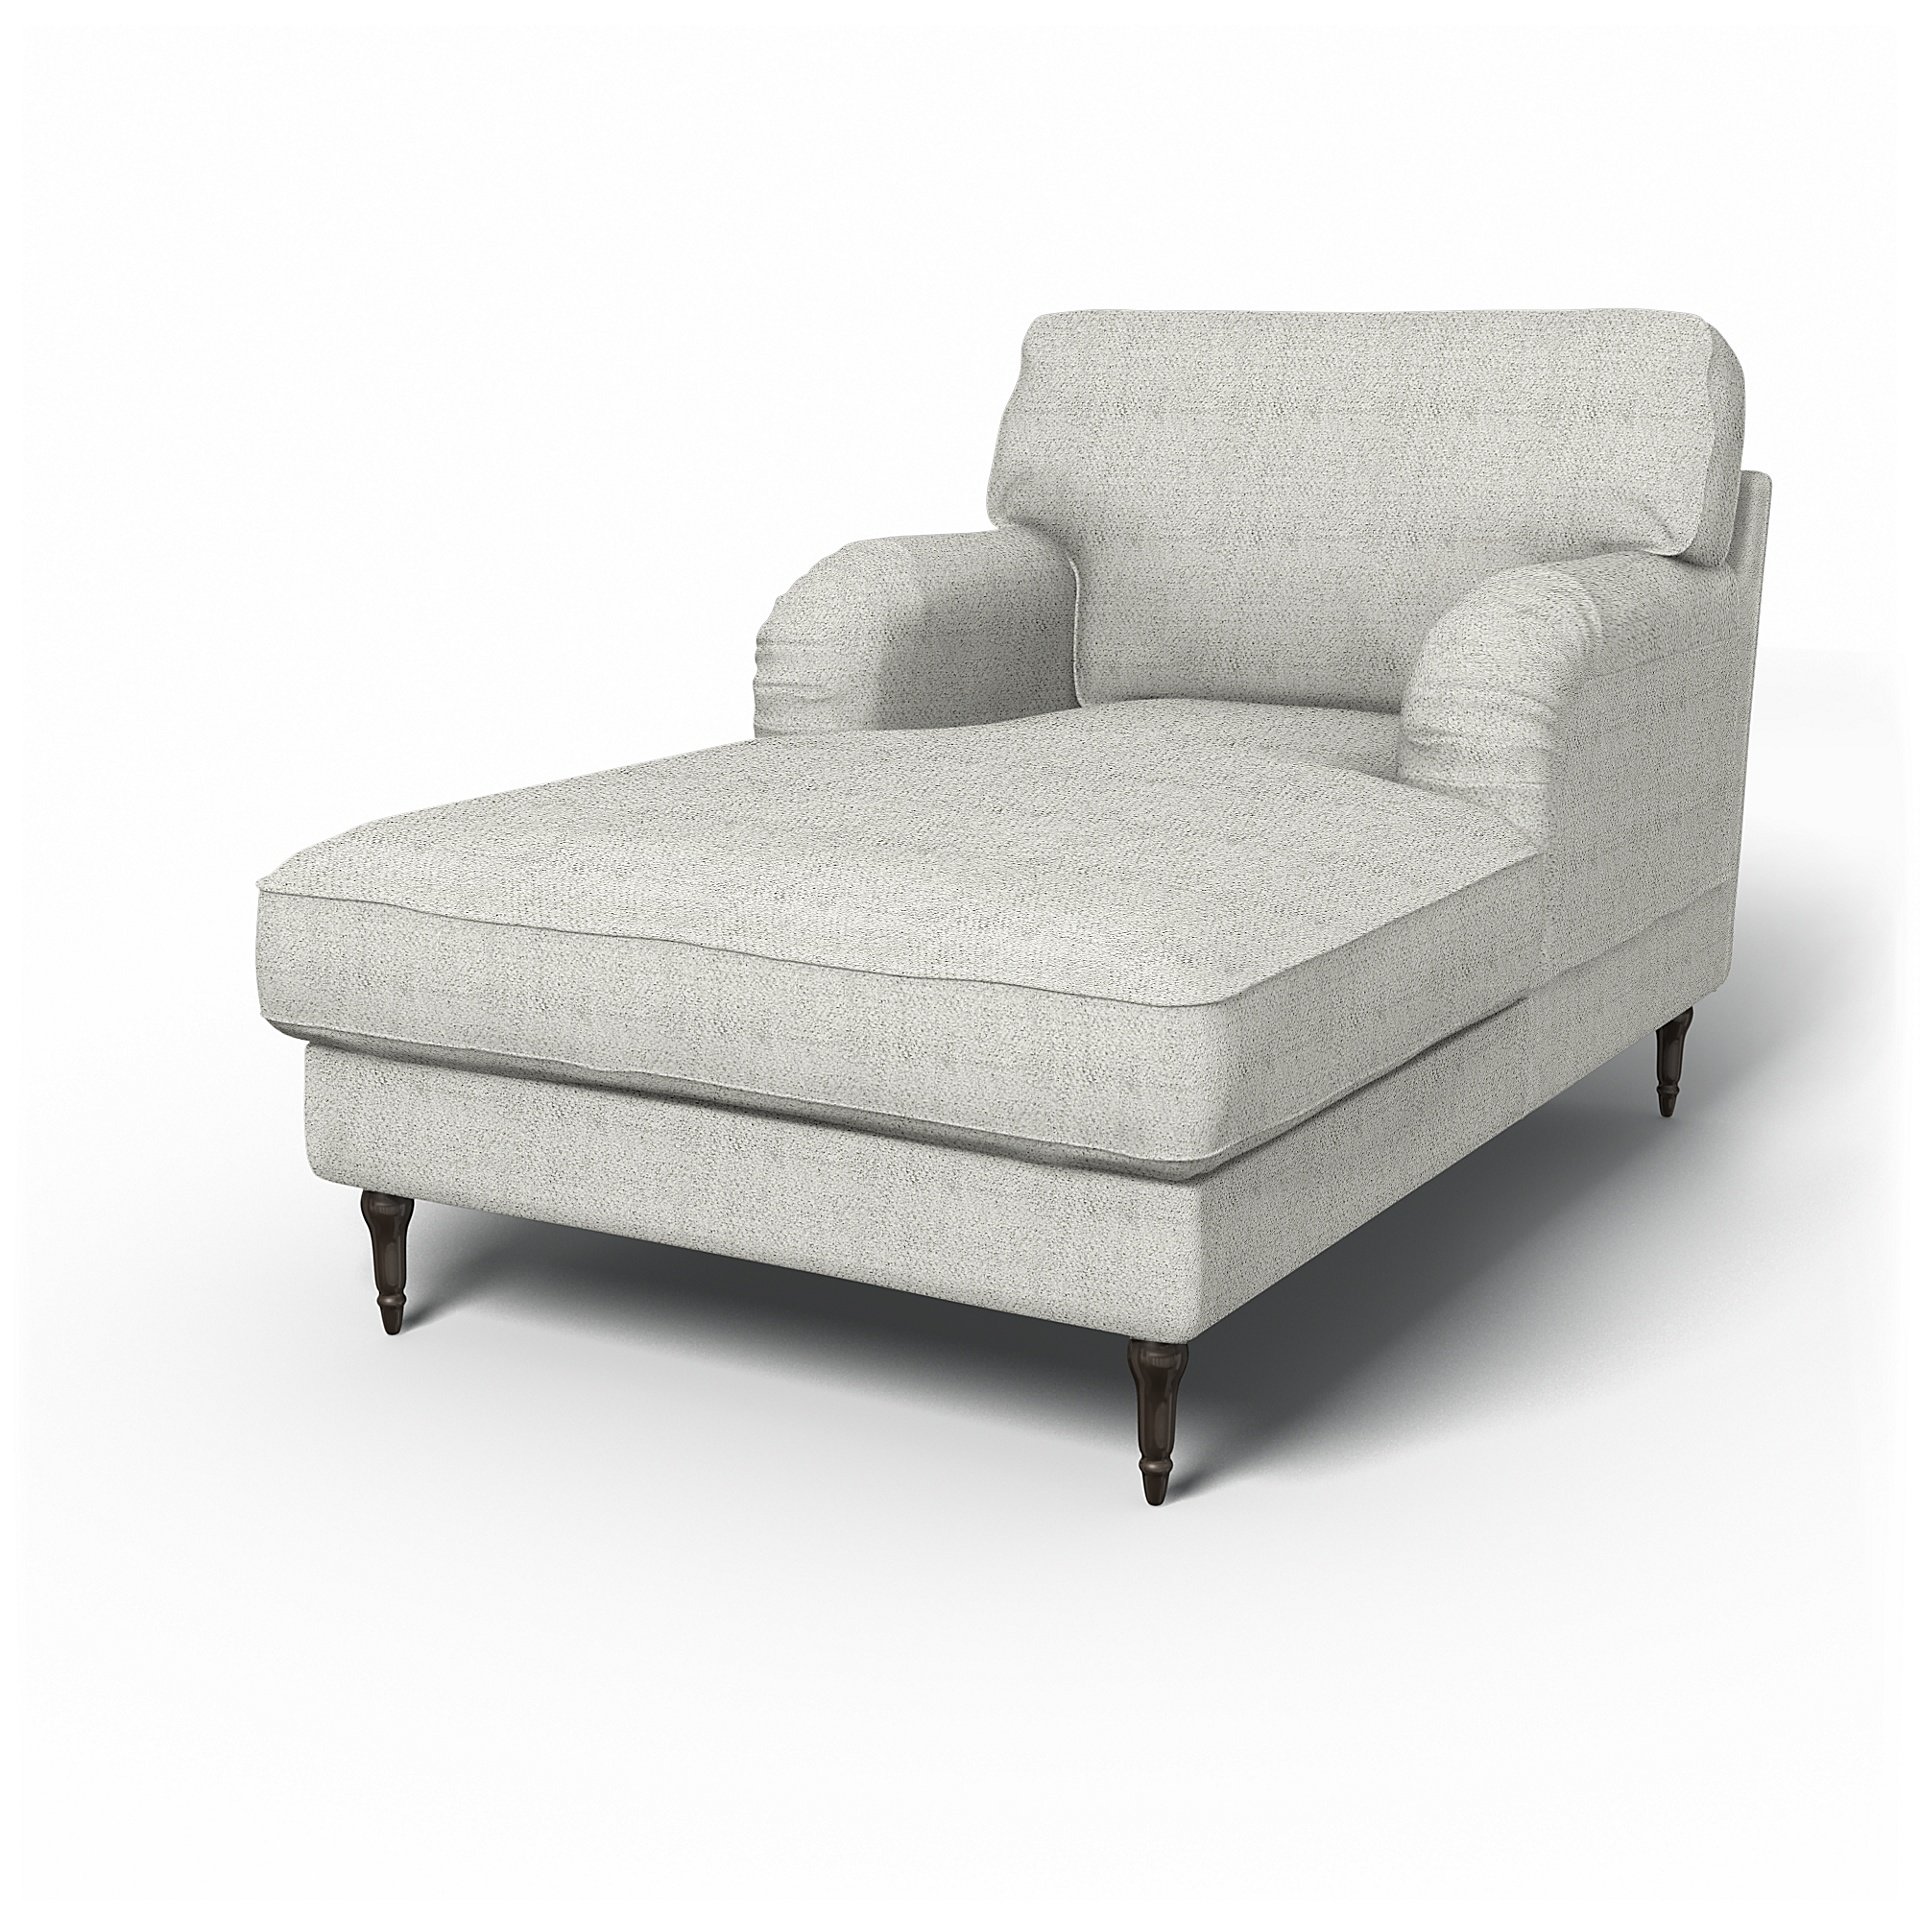 IKEA - Stocksund Chaise Longue Cover, Ivory, Boucle & Texture - Bemz